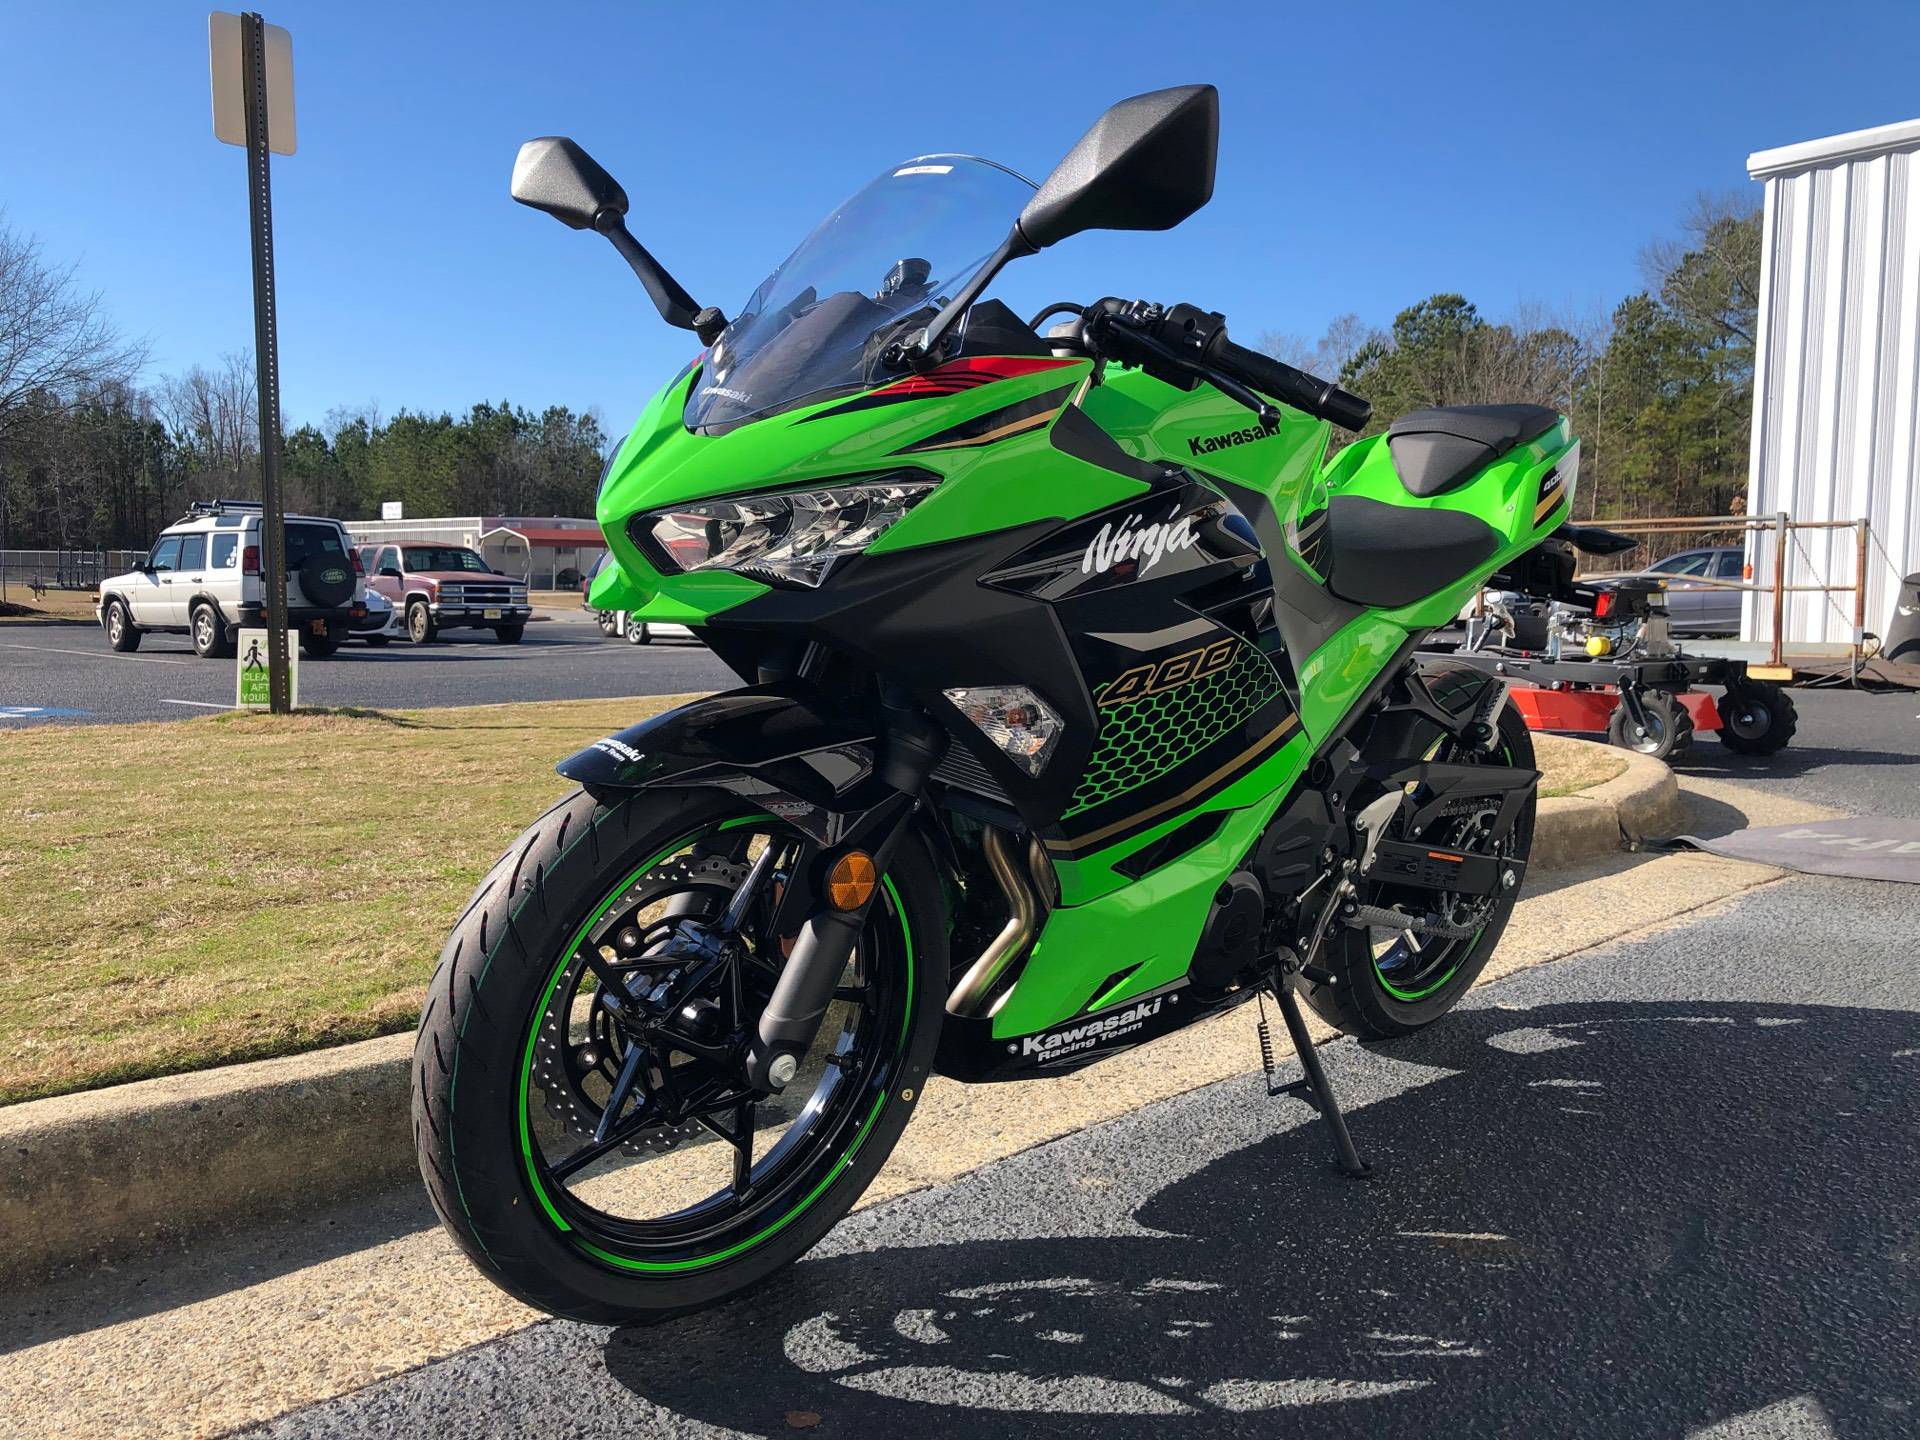 New 2020 Kawasaki Ninja 400 KRT Edition Motorcycles in Greenville, NC ...